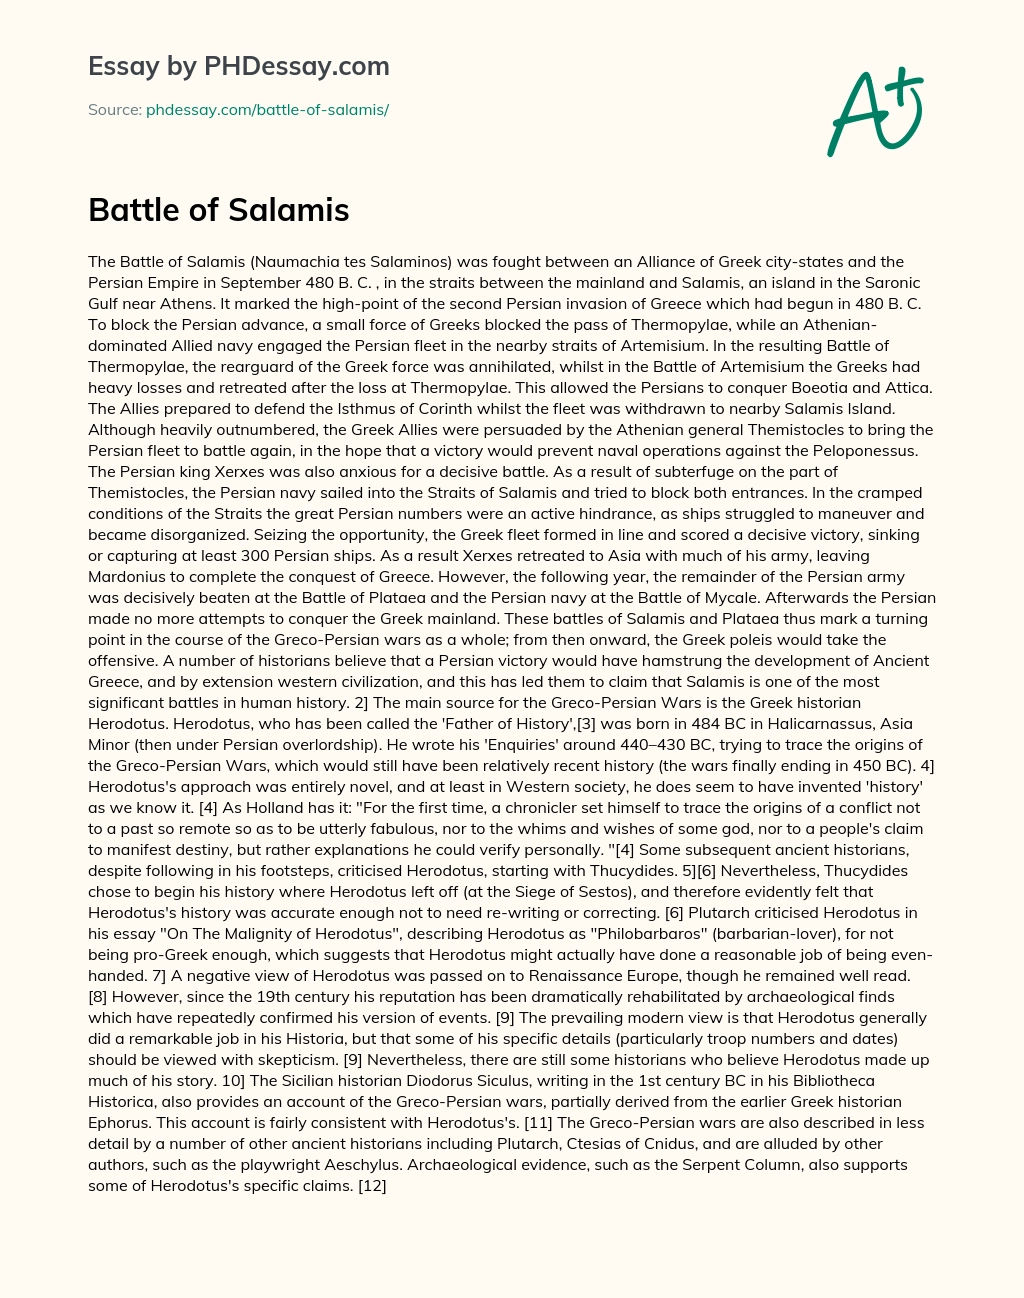 Battle of Salamis essay